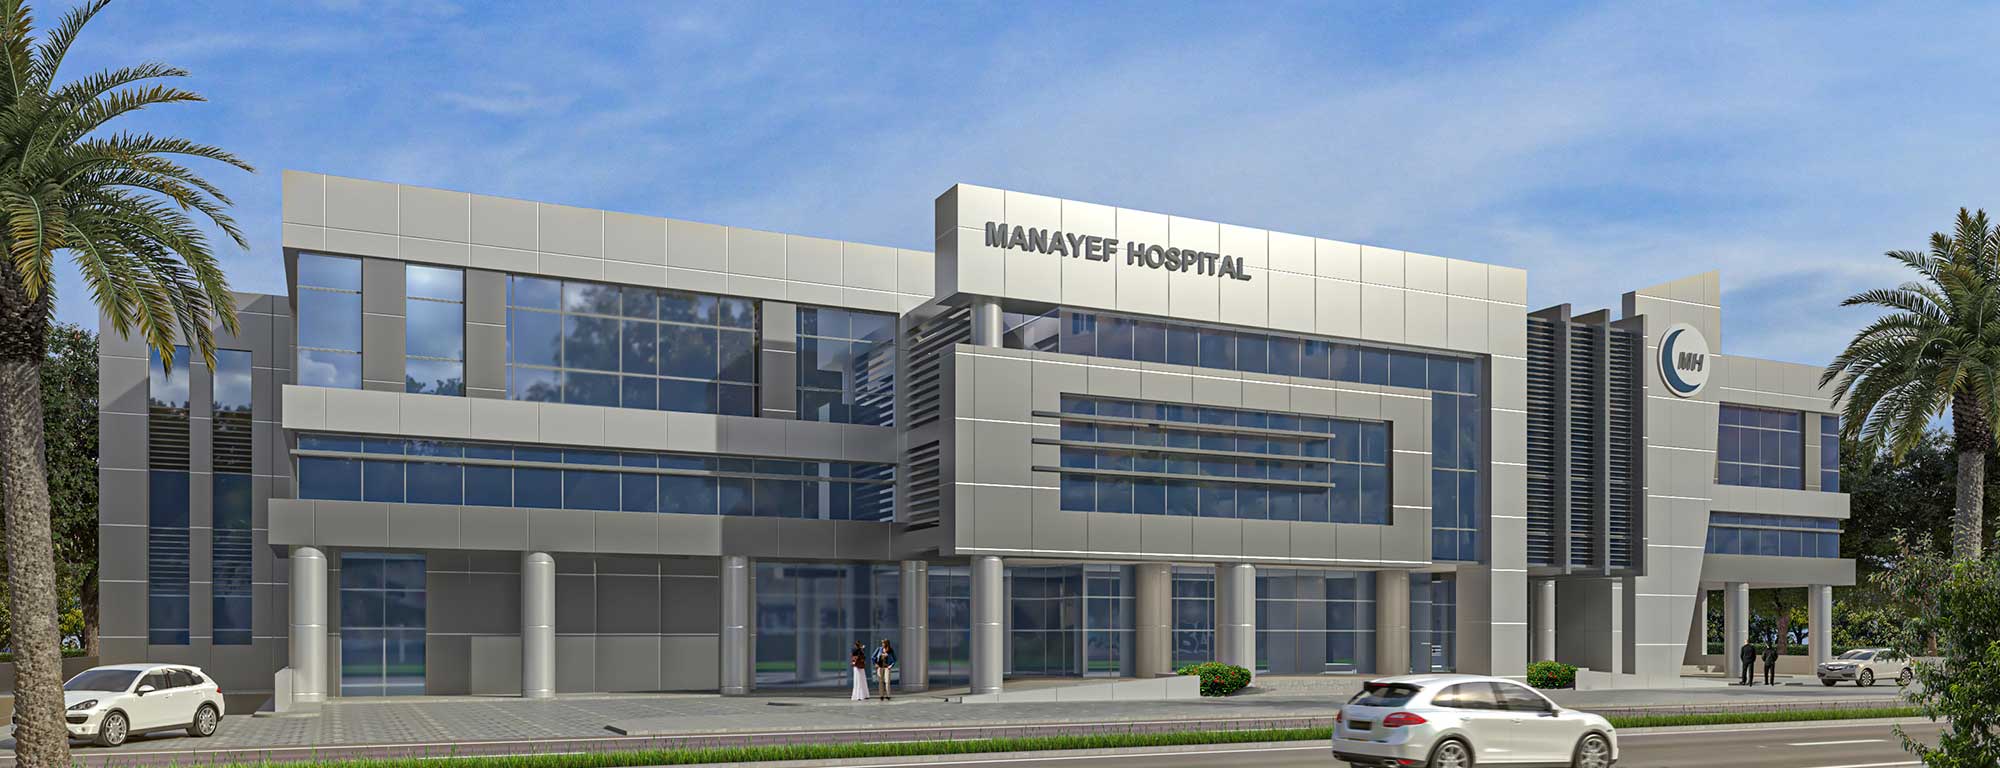 Manayef Hospital Project - Madinat Zayed